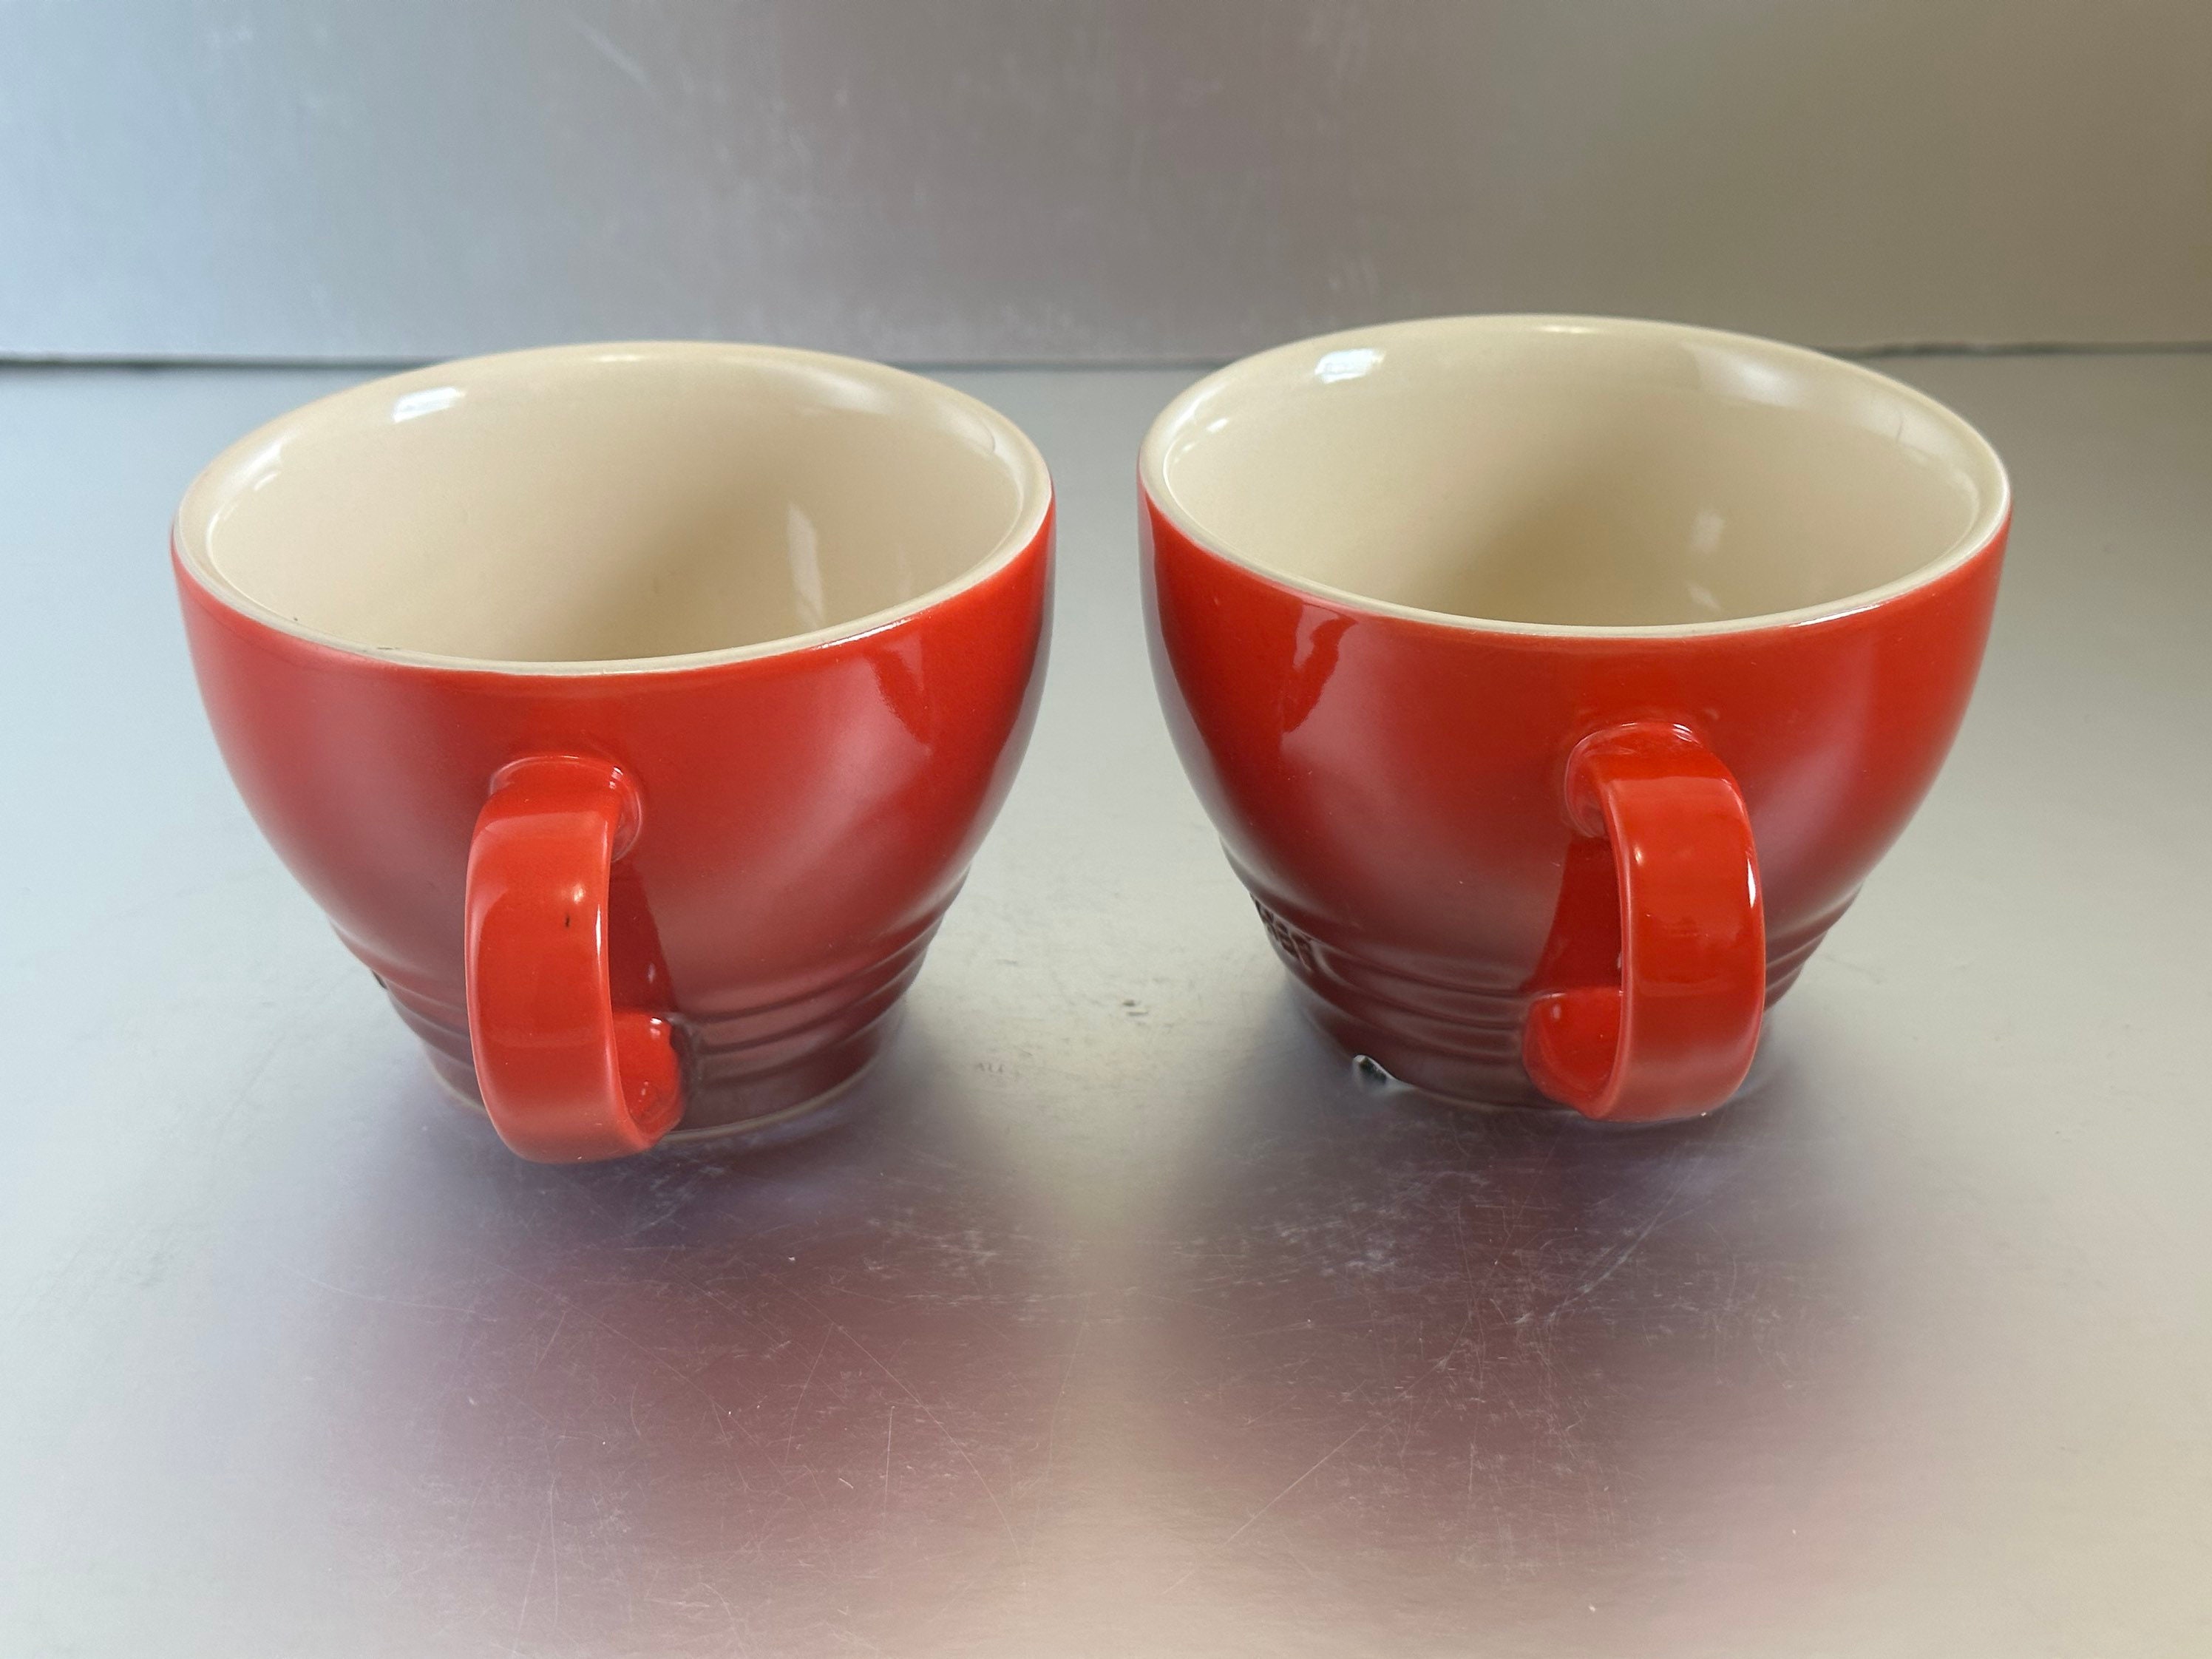 Le Creuset Stoneware Bistro Cappuccino Mug & Reviews